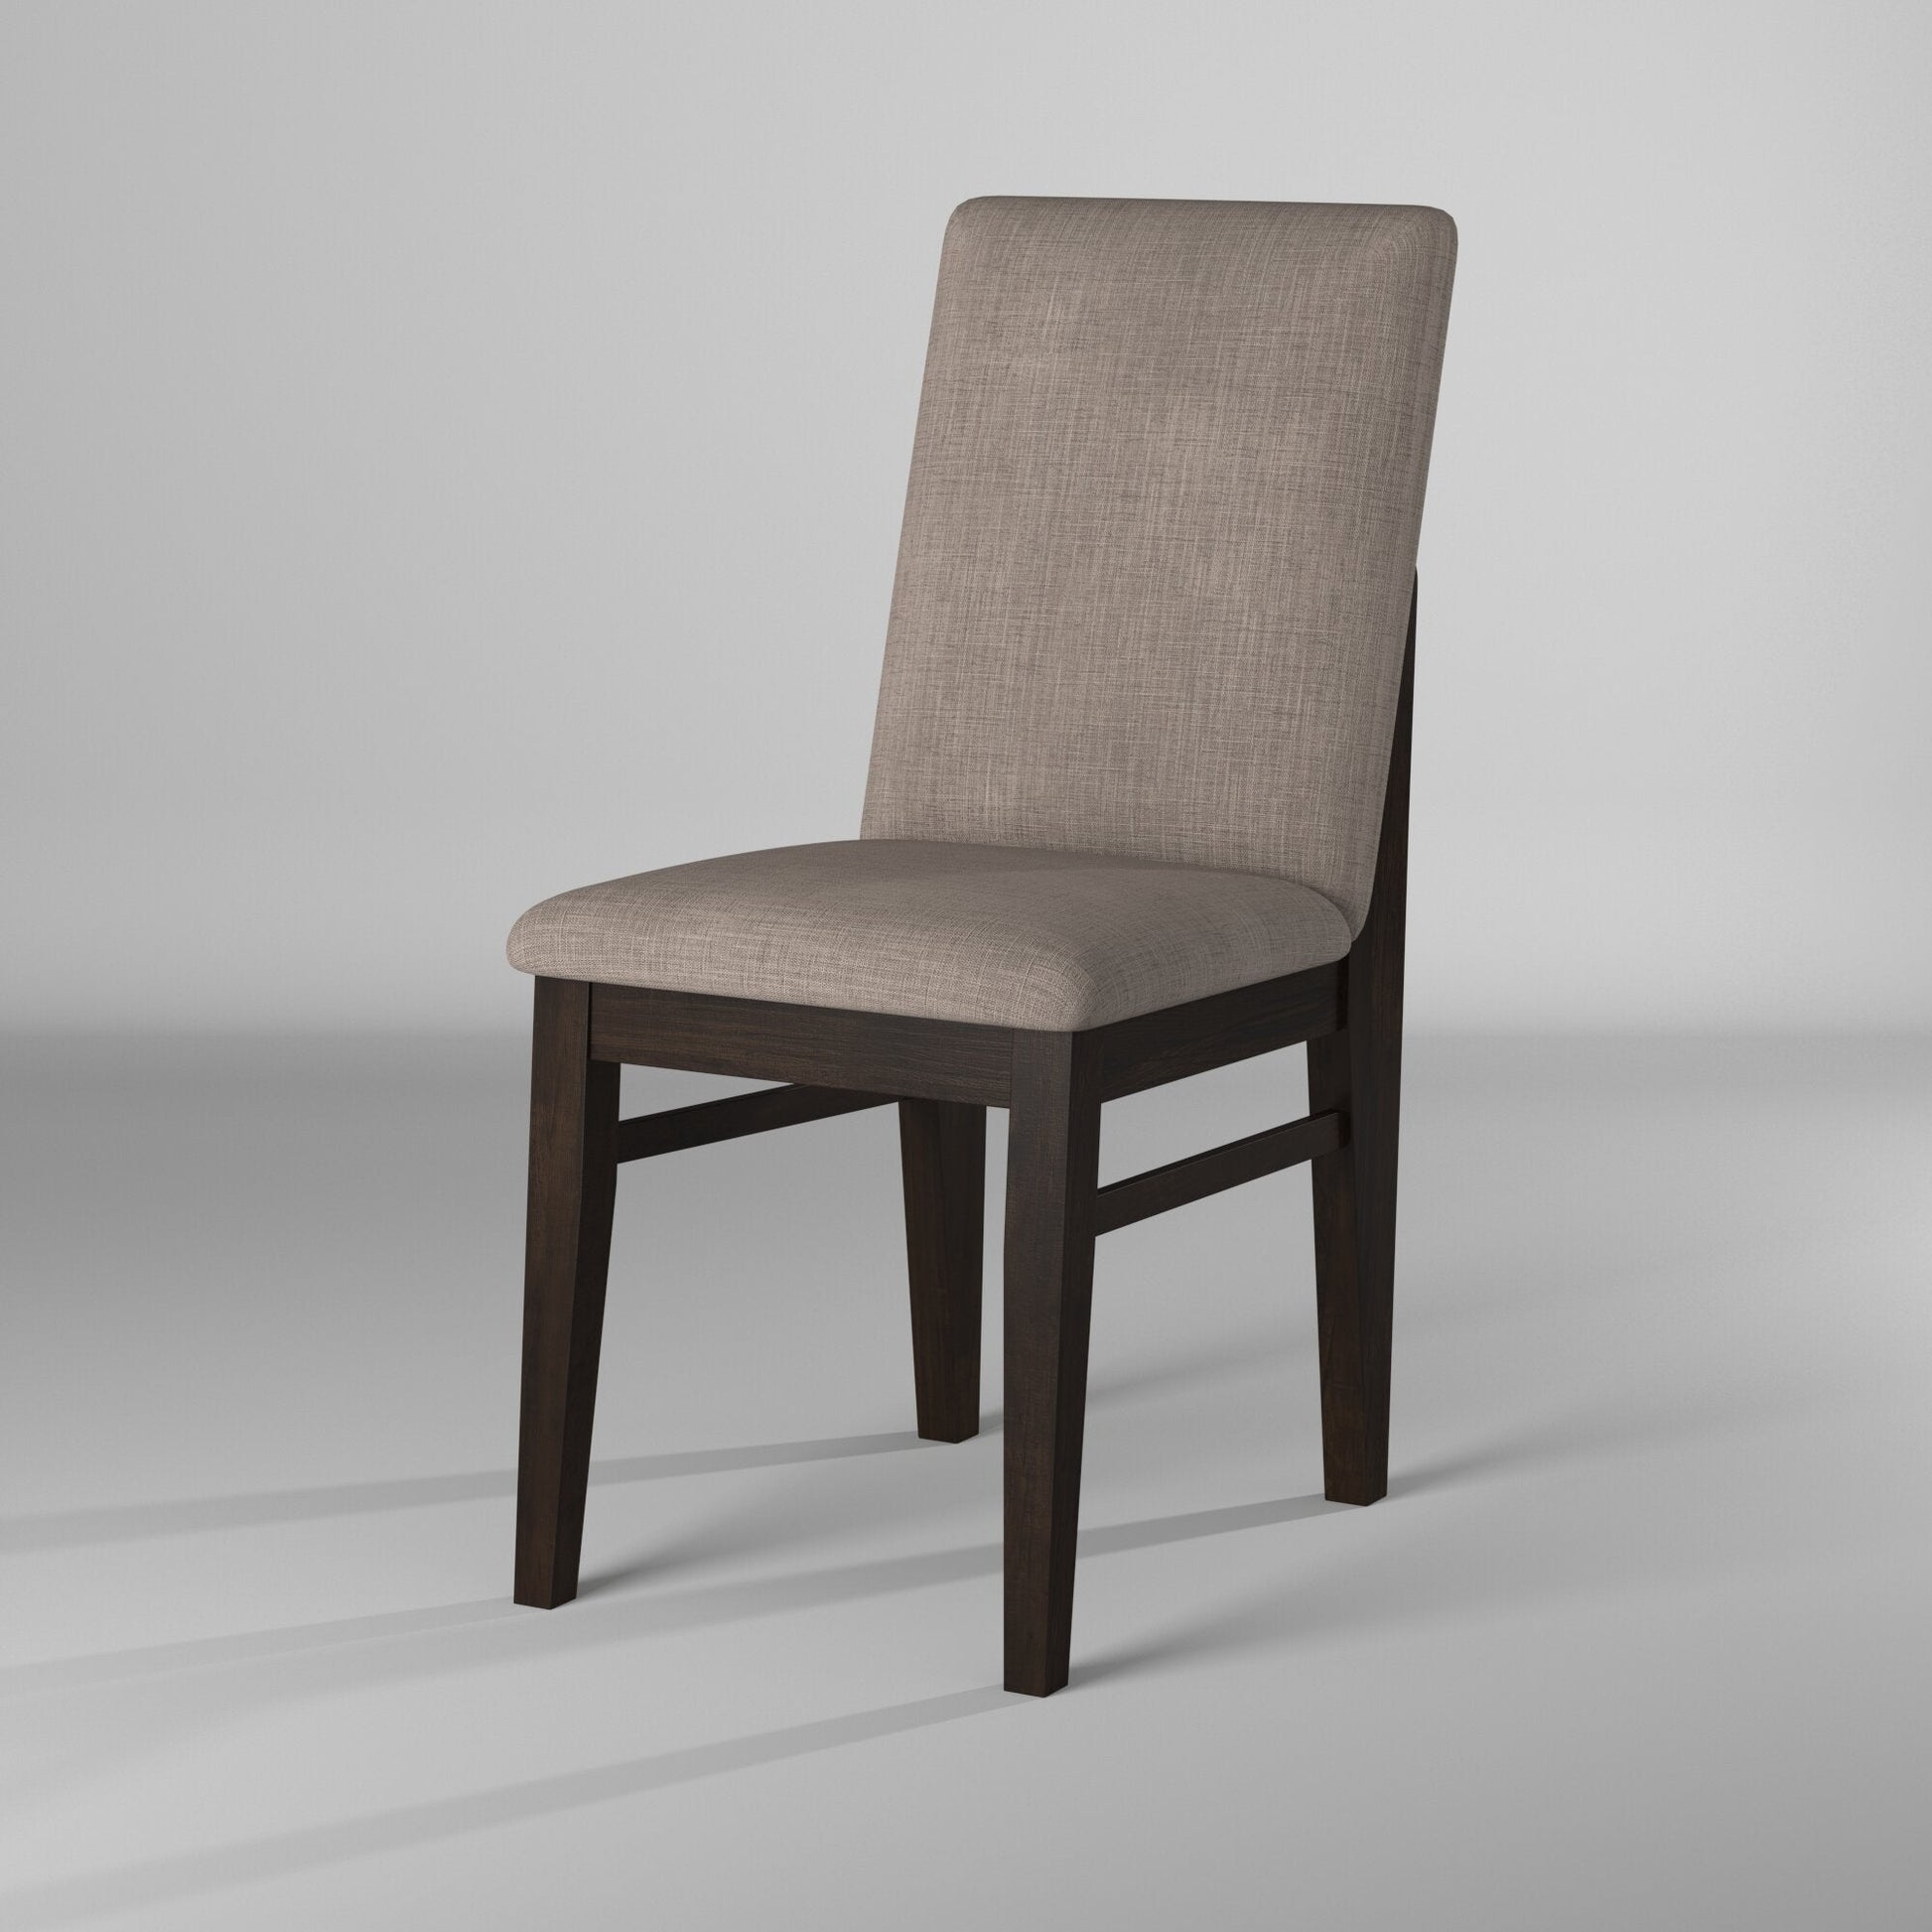 Olejo Side Chairs, Chocolate - Alpine Furniture